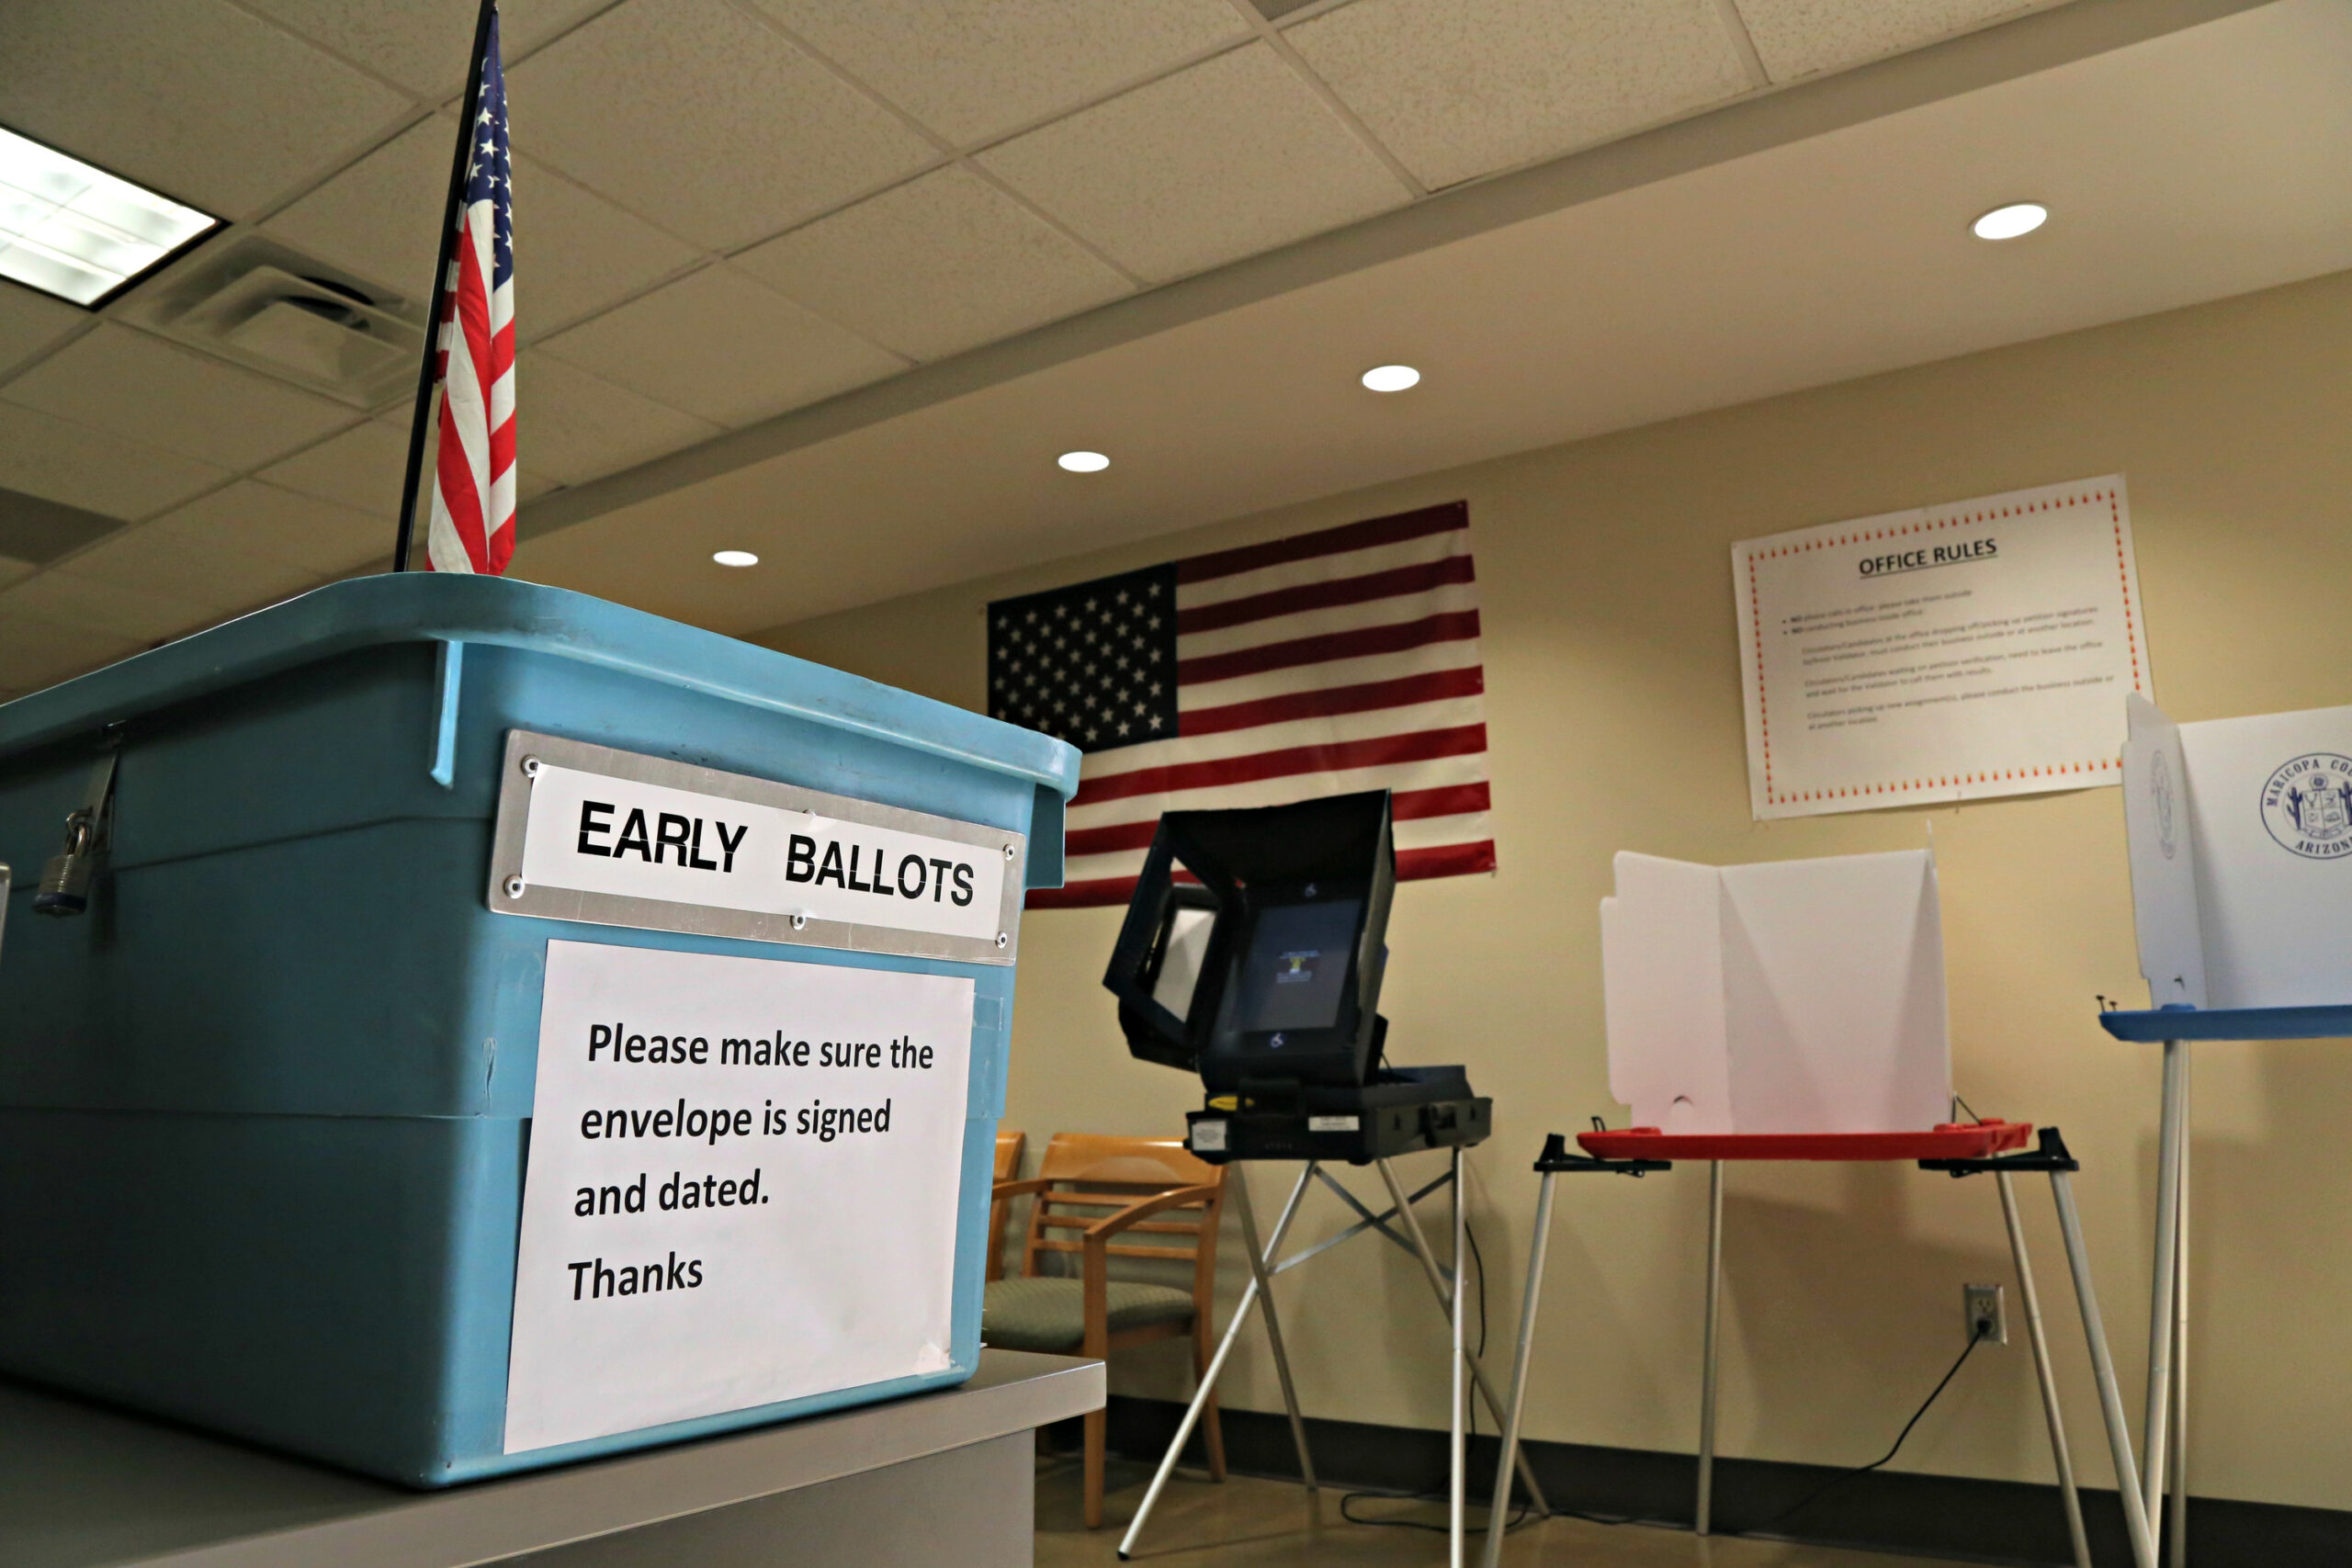 Early ballots box